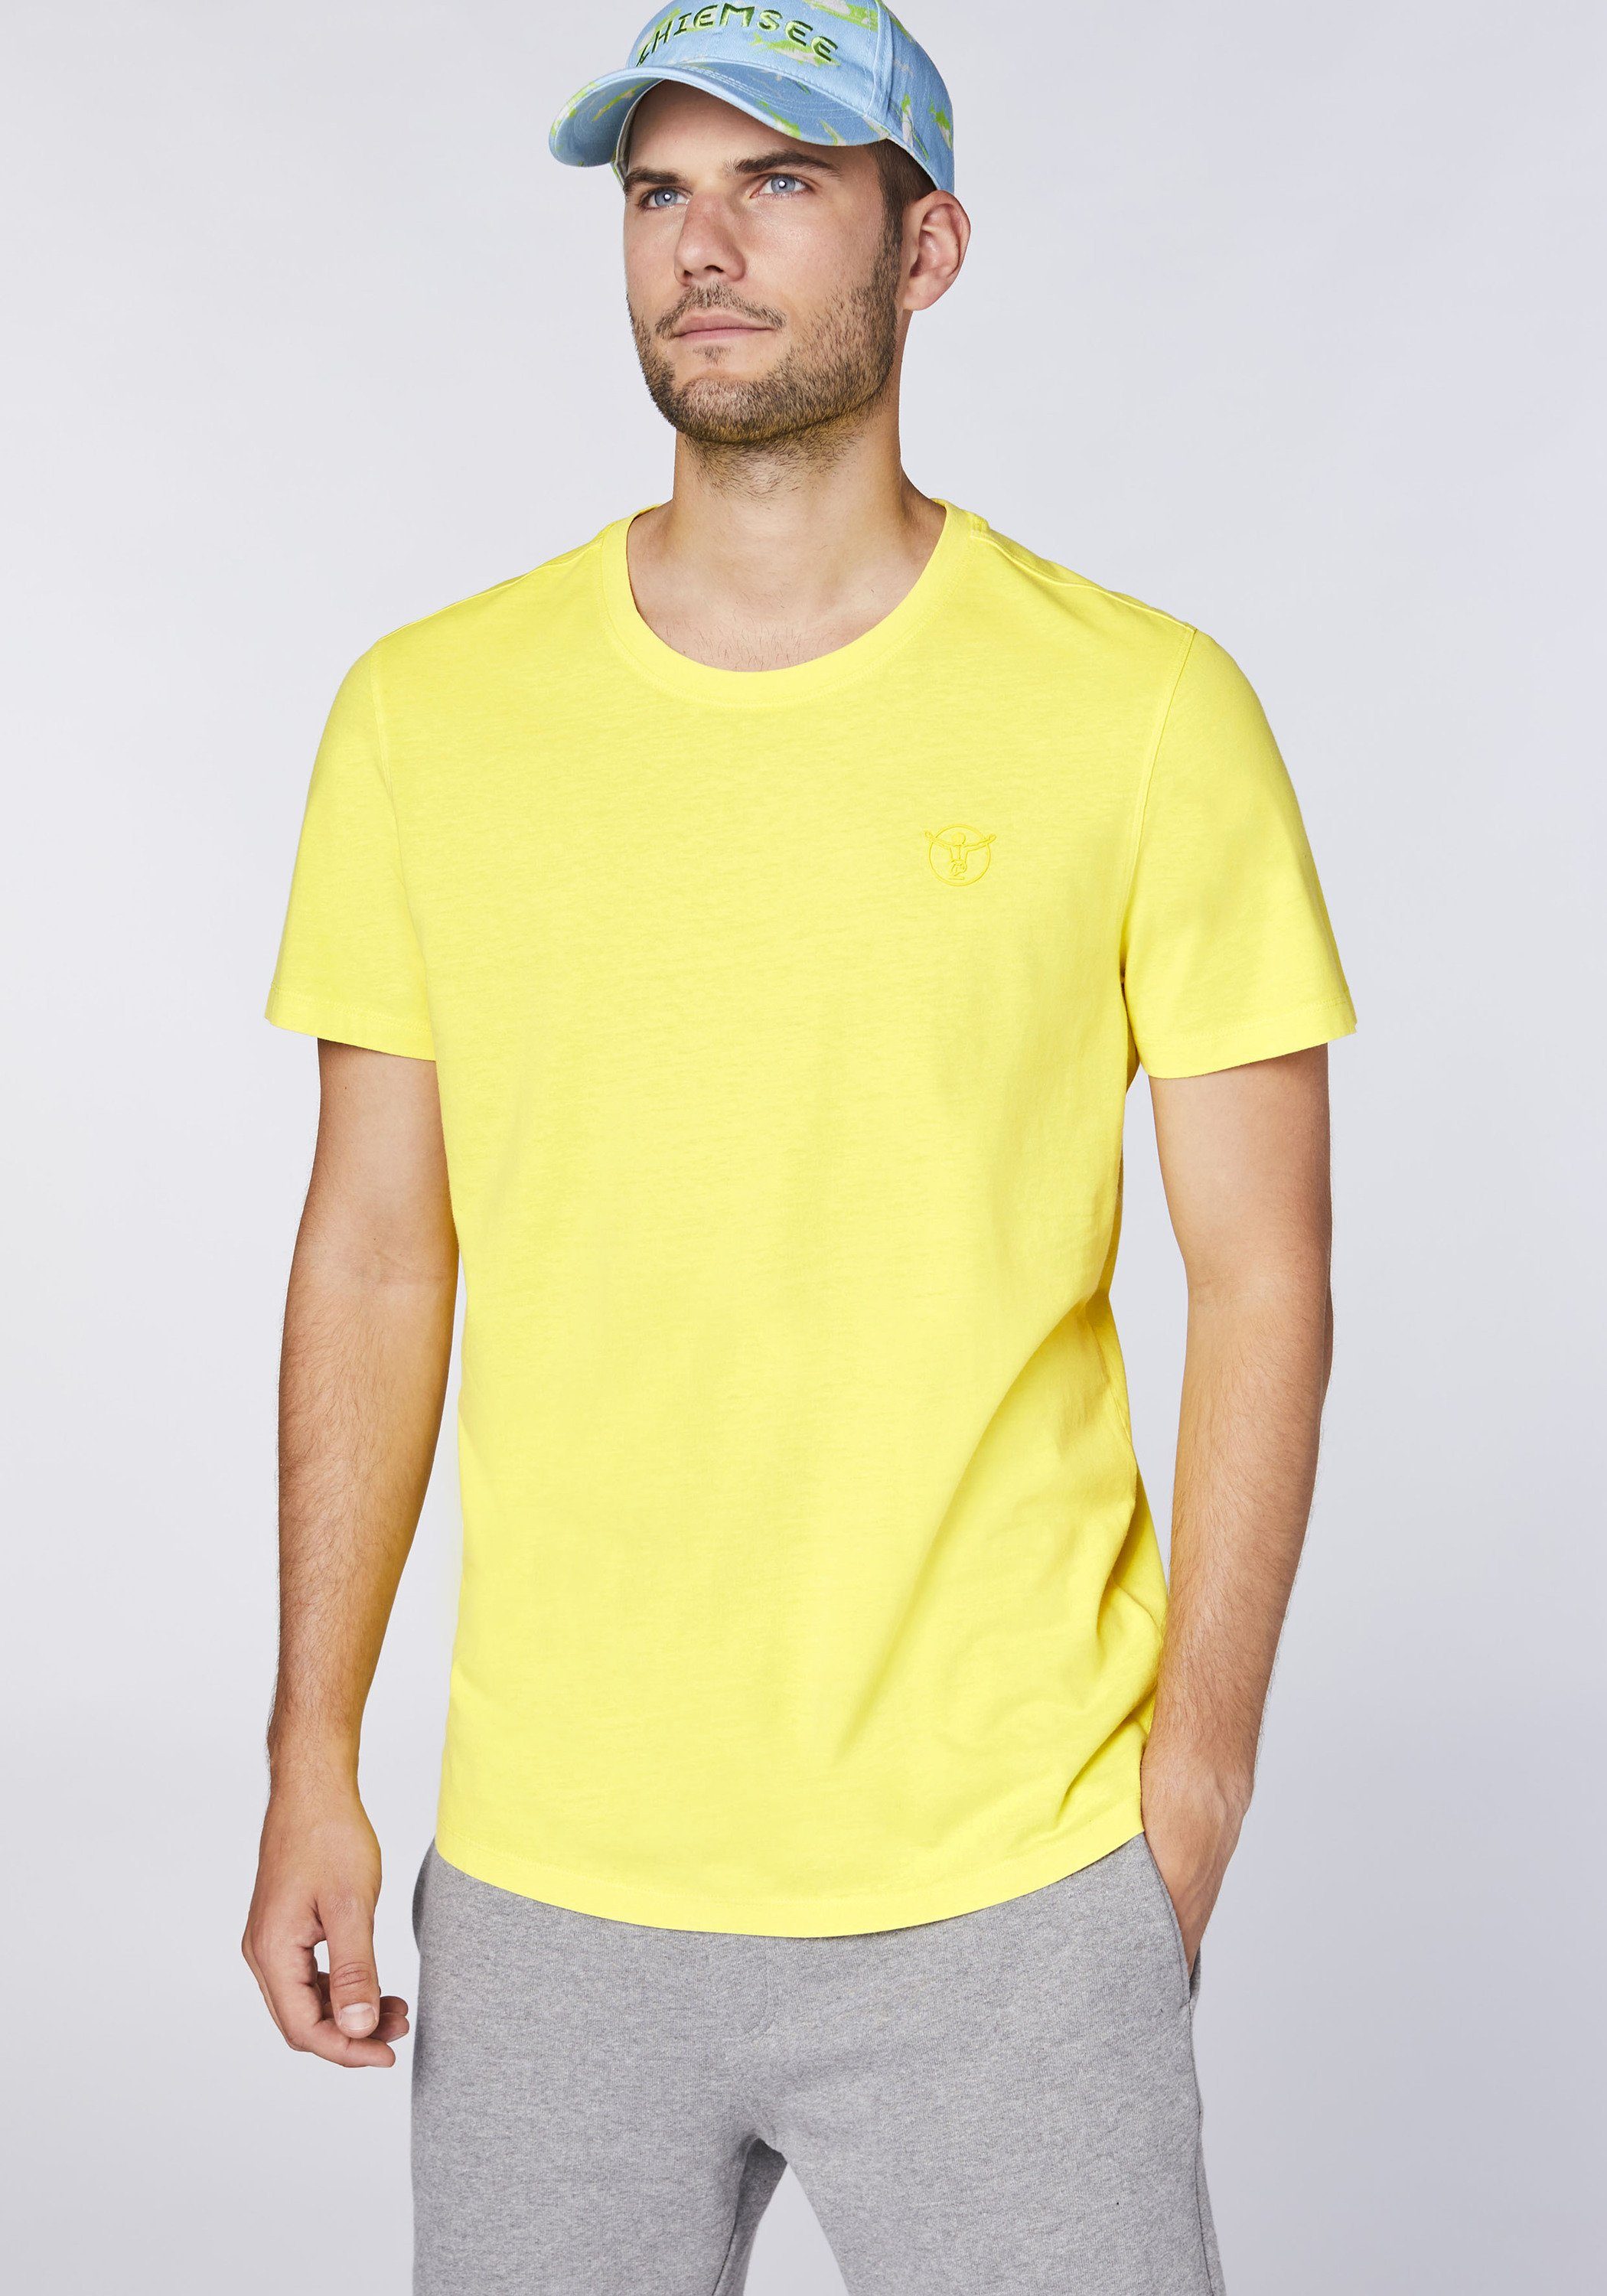 Lemon Tonic Baumwolle Print-Shirt T-Shirt 1 Chiemsee aus